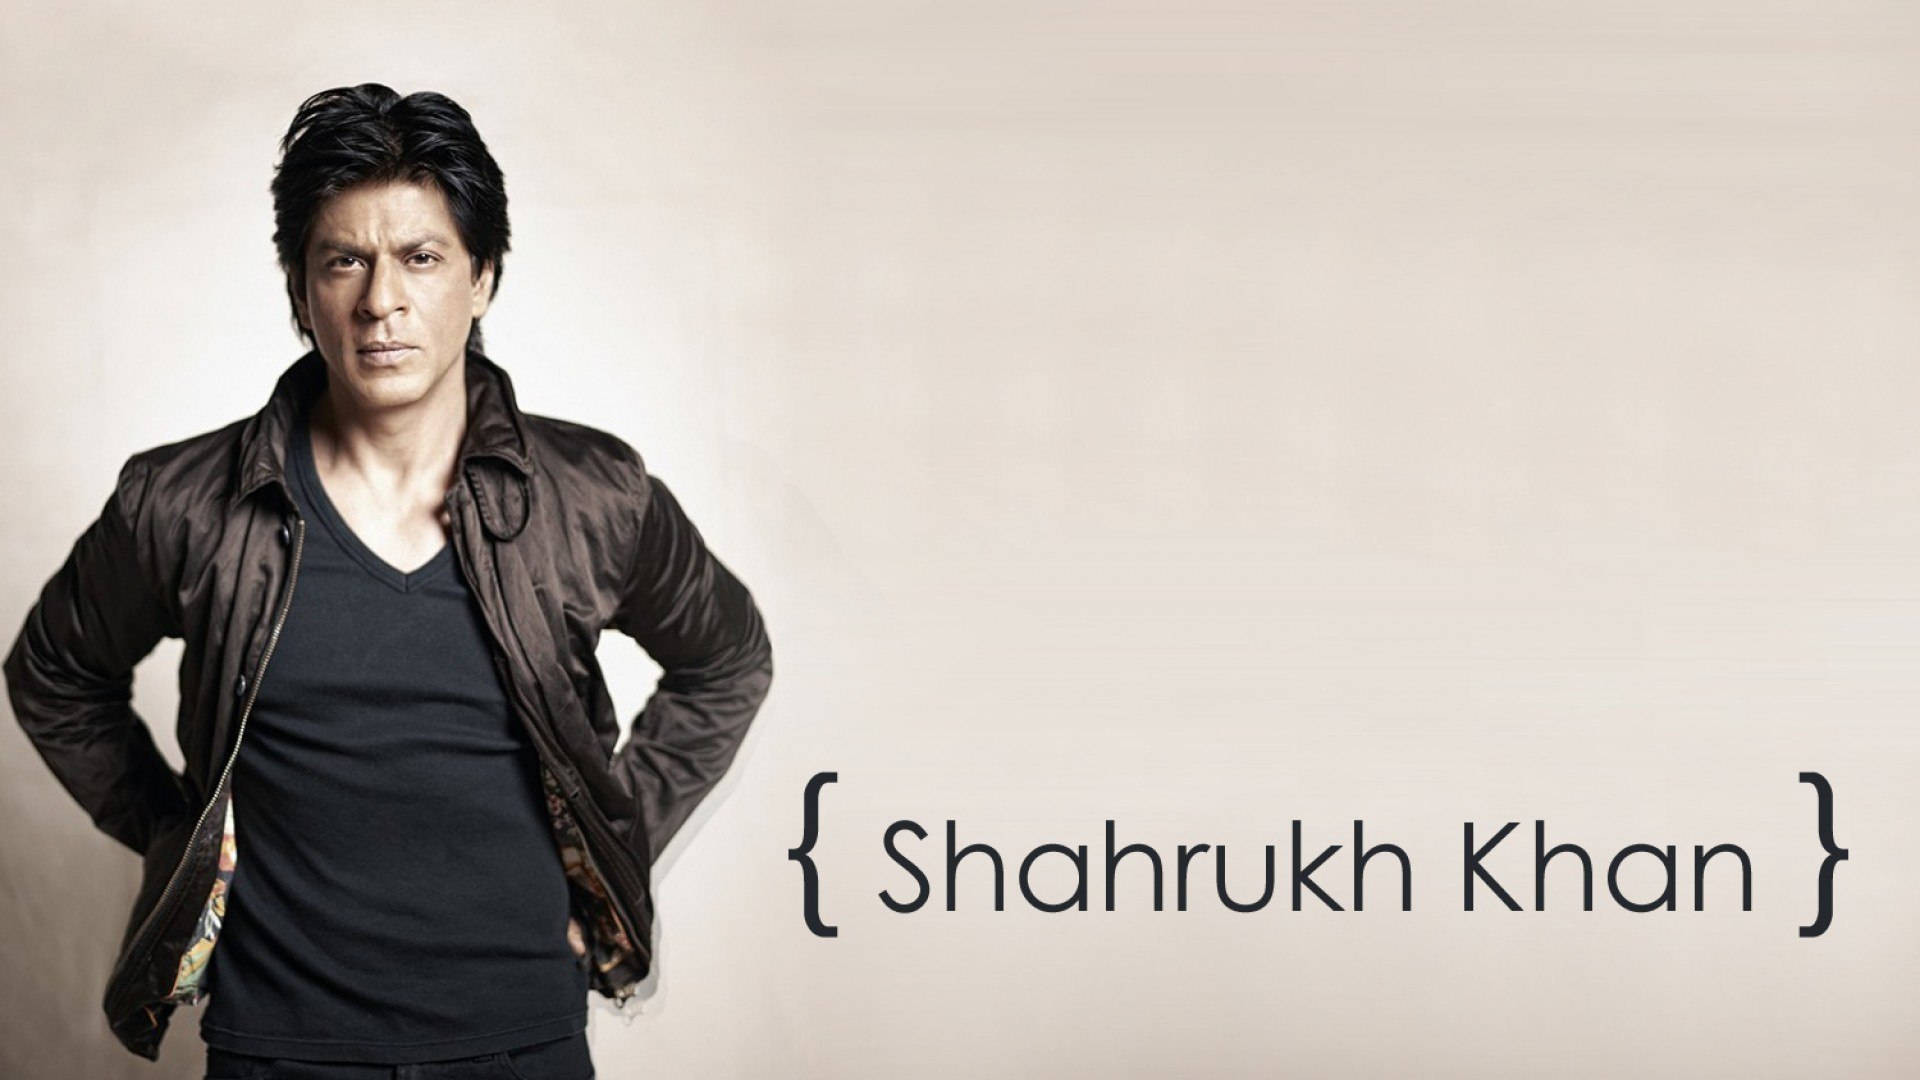 Shah Rukh Khan Brown Jacka Wallpaper